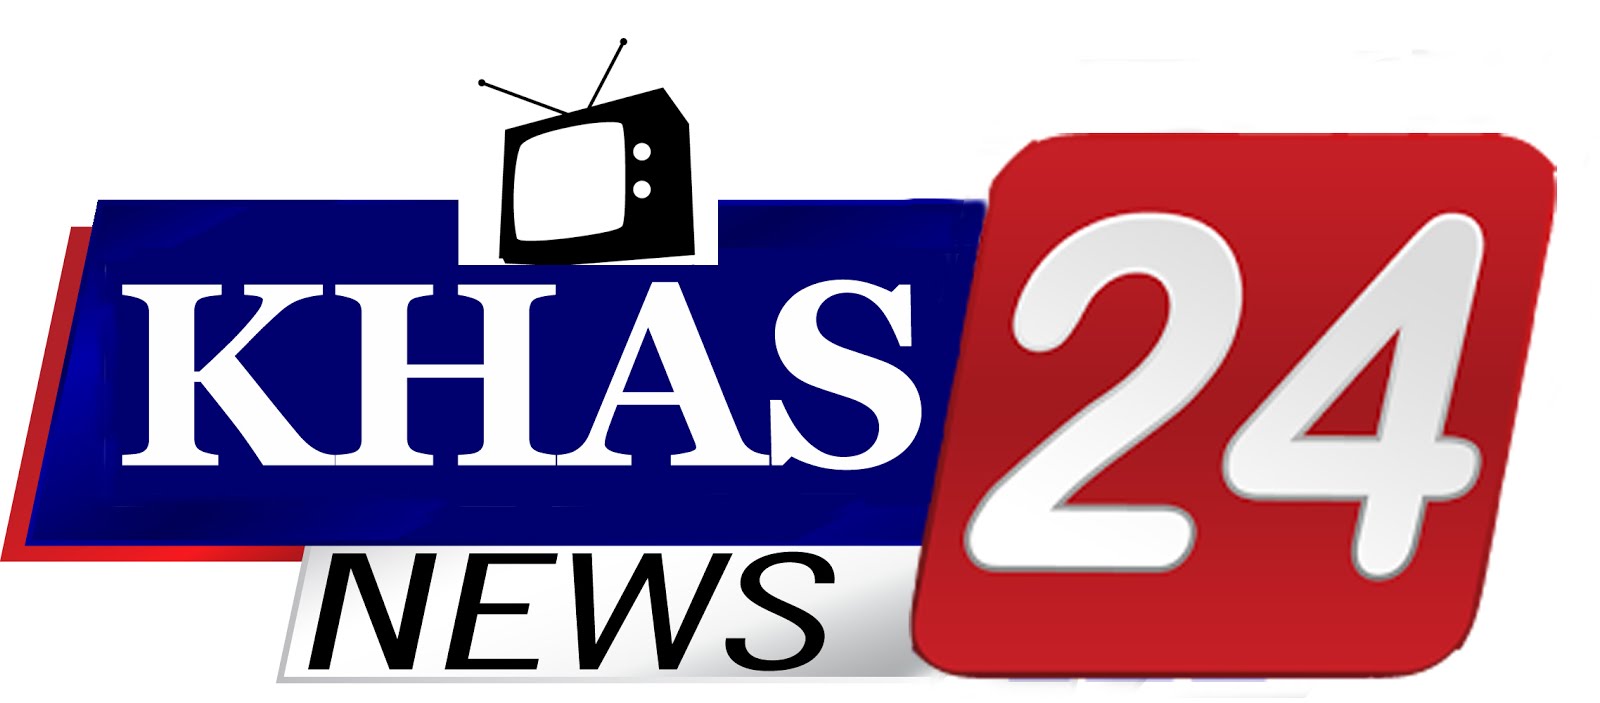 Khas24News |18 talks, Health Tips Hindi, Home Remedies, Relationships, News in Hindi, rochak